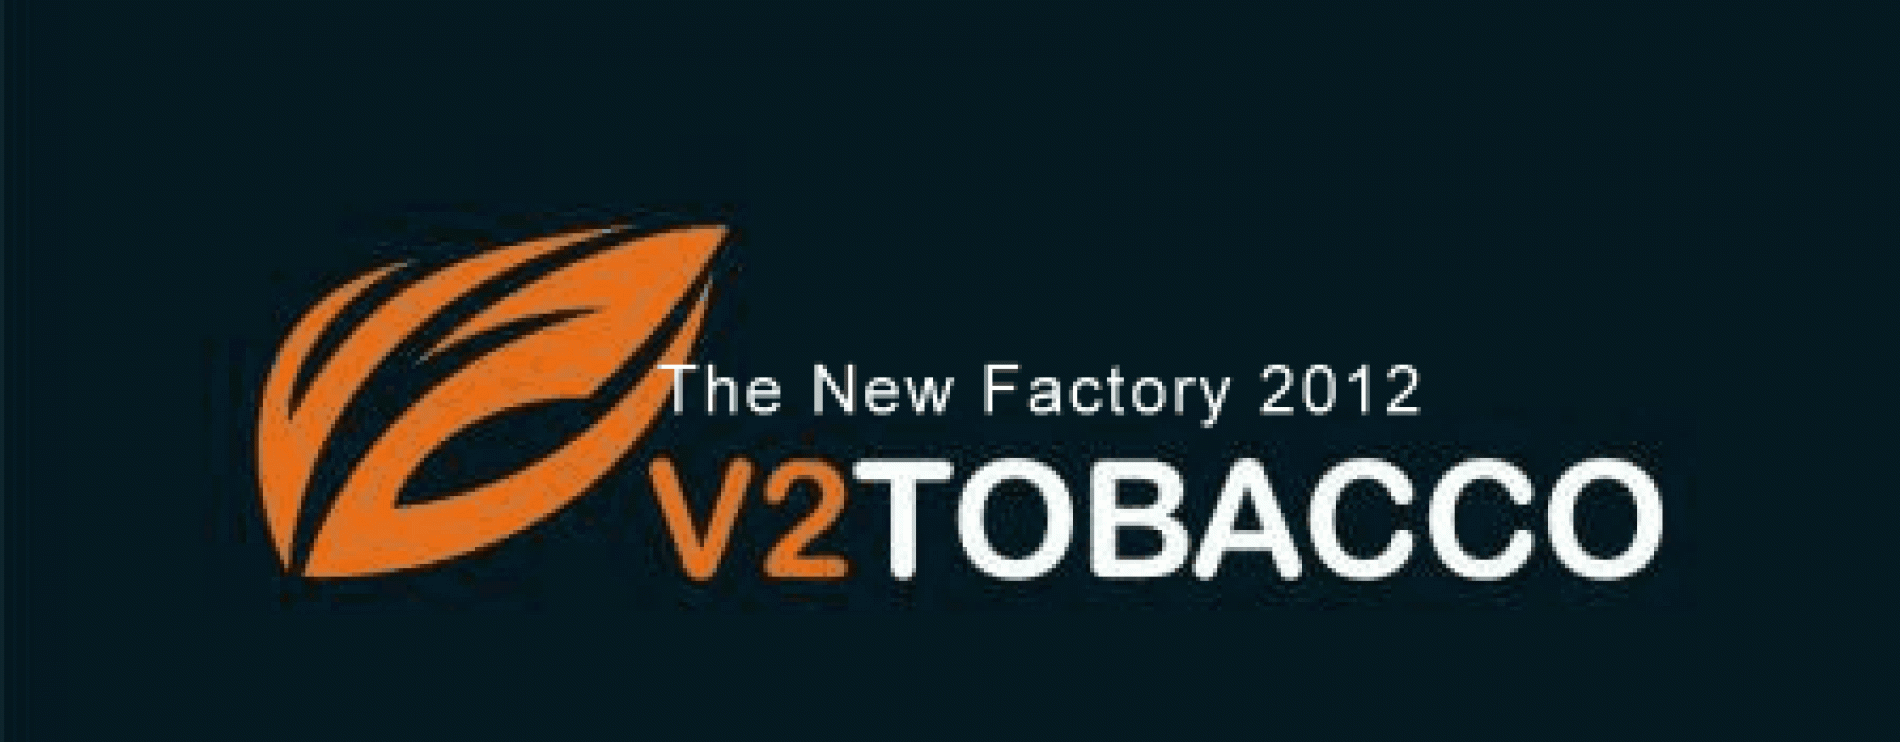 New V2 Tobacco snus factory starts production